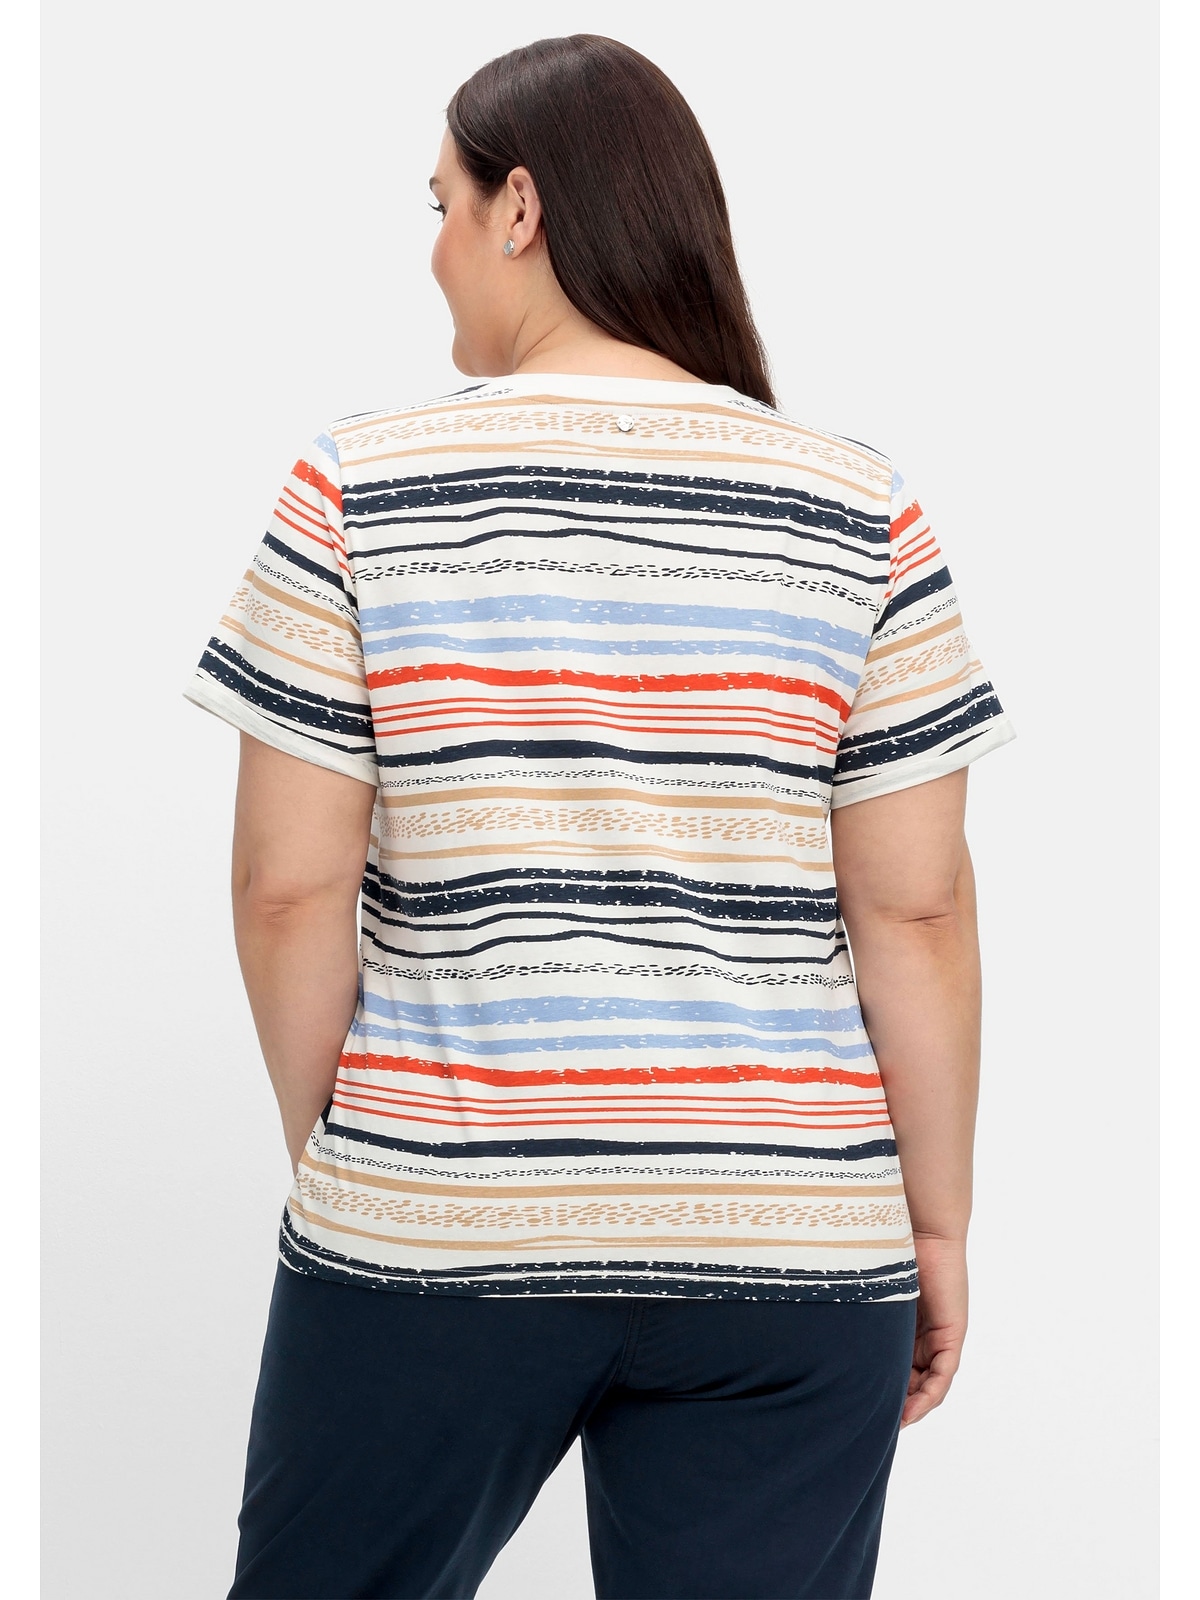 Sheego T-Shirt mit walking shoppen am »Große Schnürung Größen«, Ausschnitt I\'m 